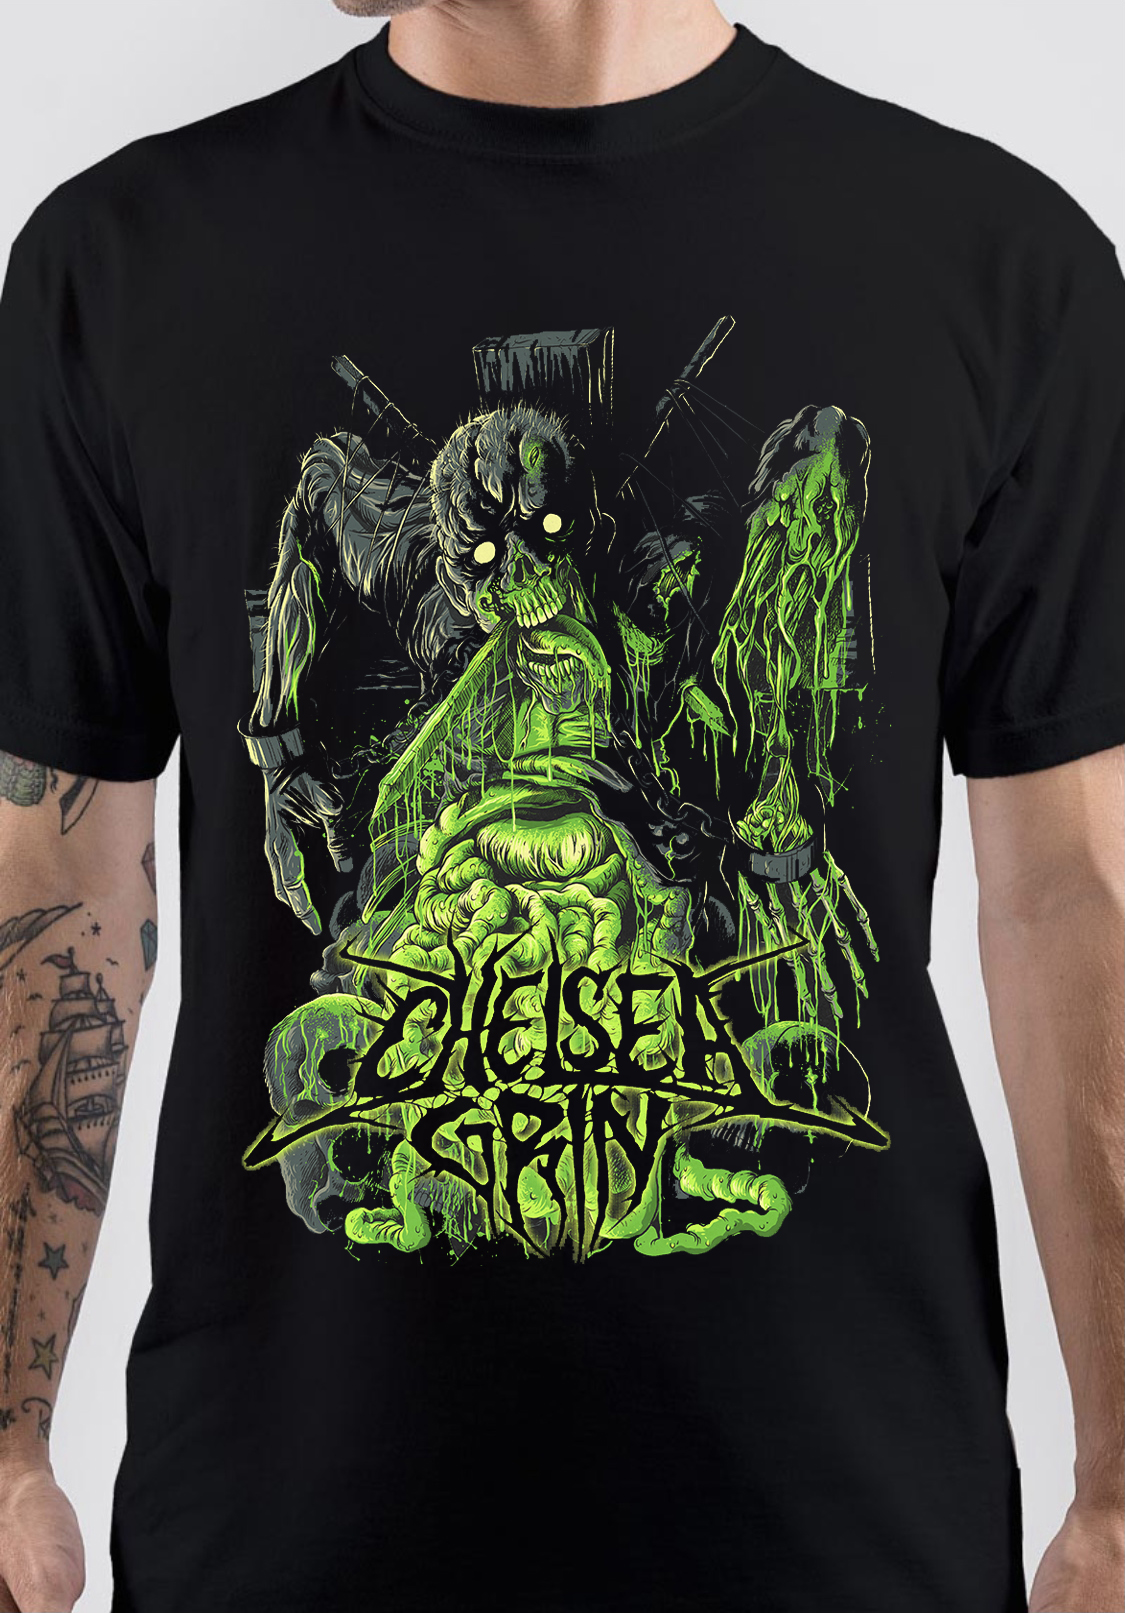 Creepyguy Chelsea Grin T-Shirt